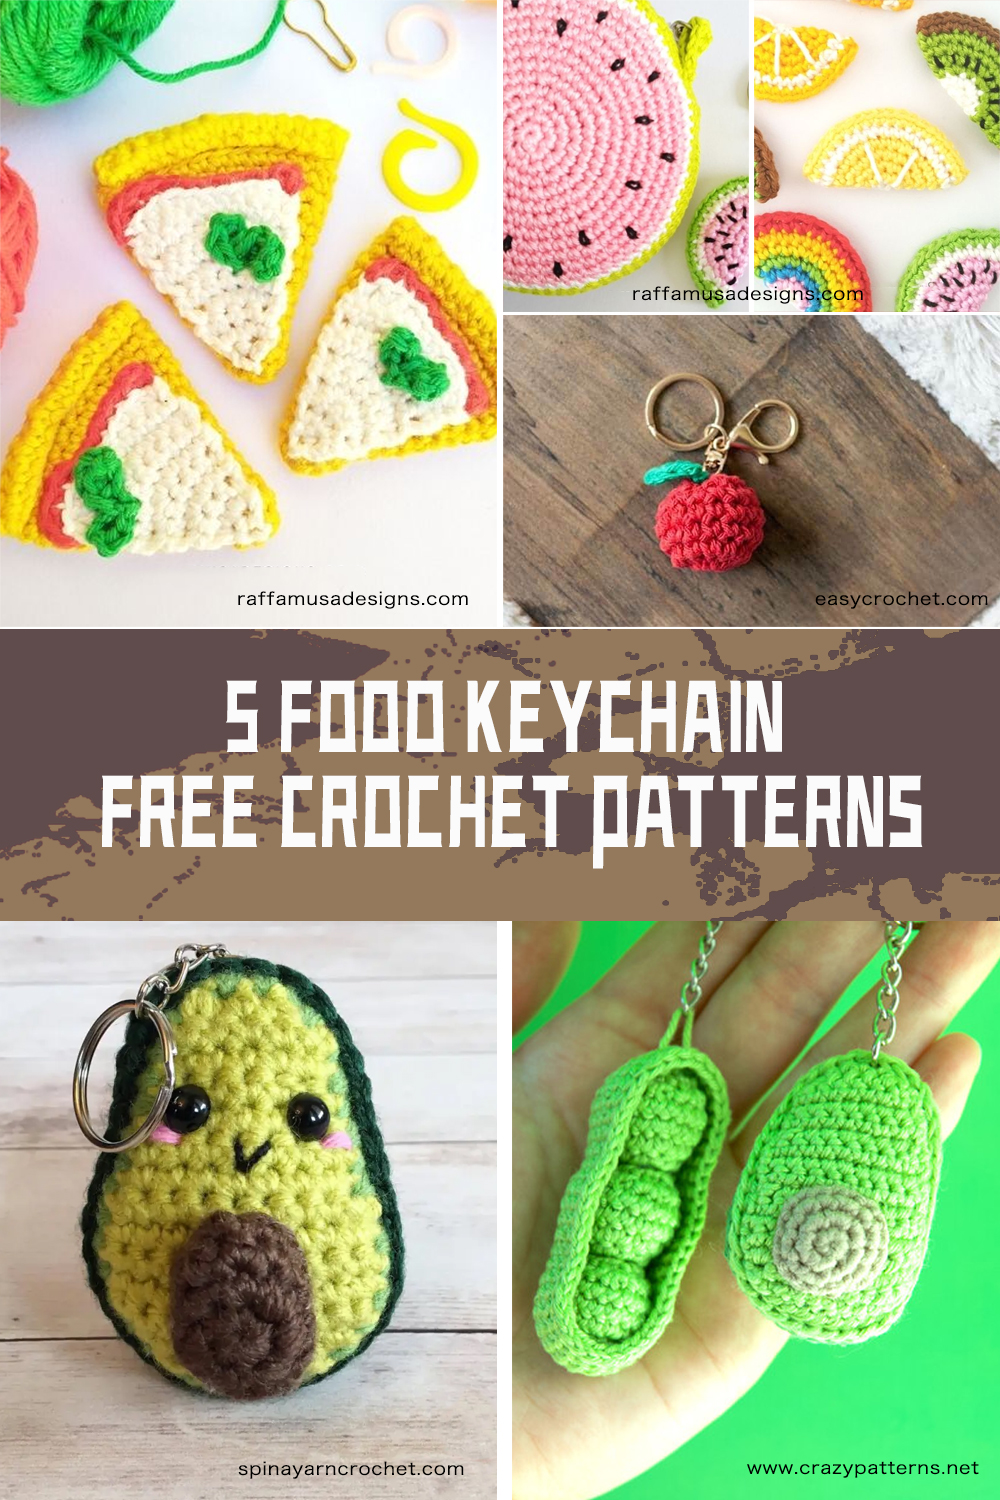  5 FREE Food Crochet Keychain Patterns 